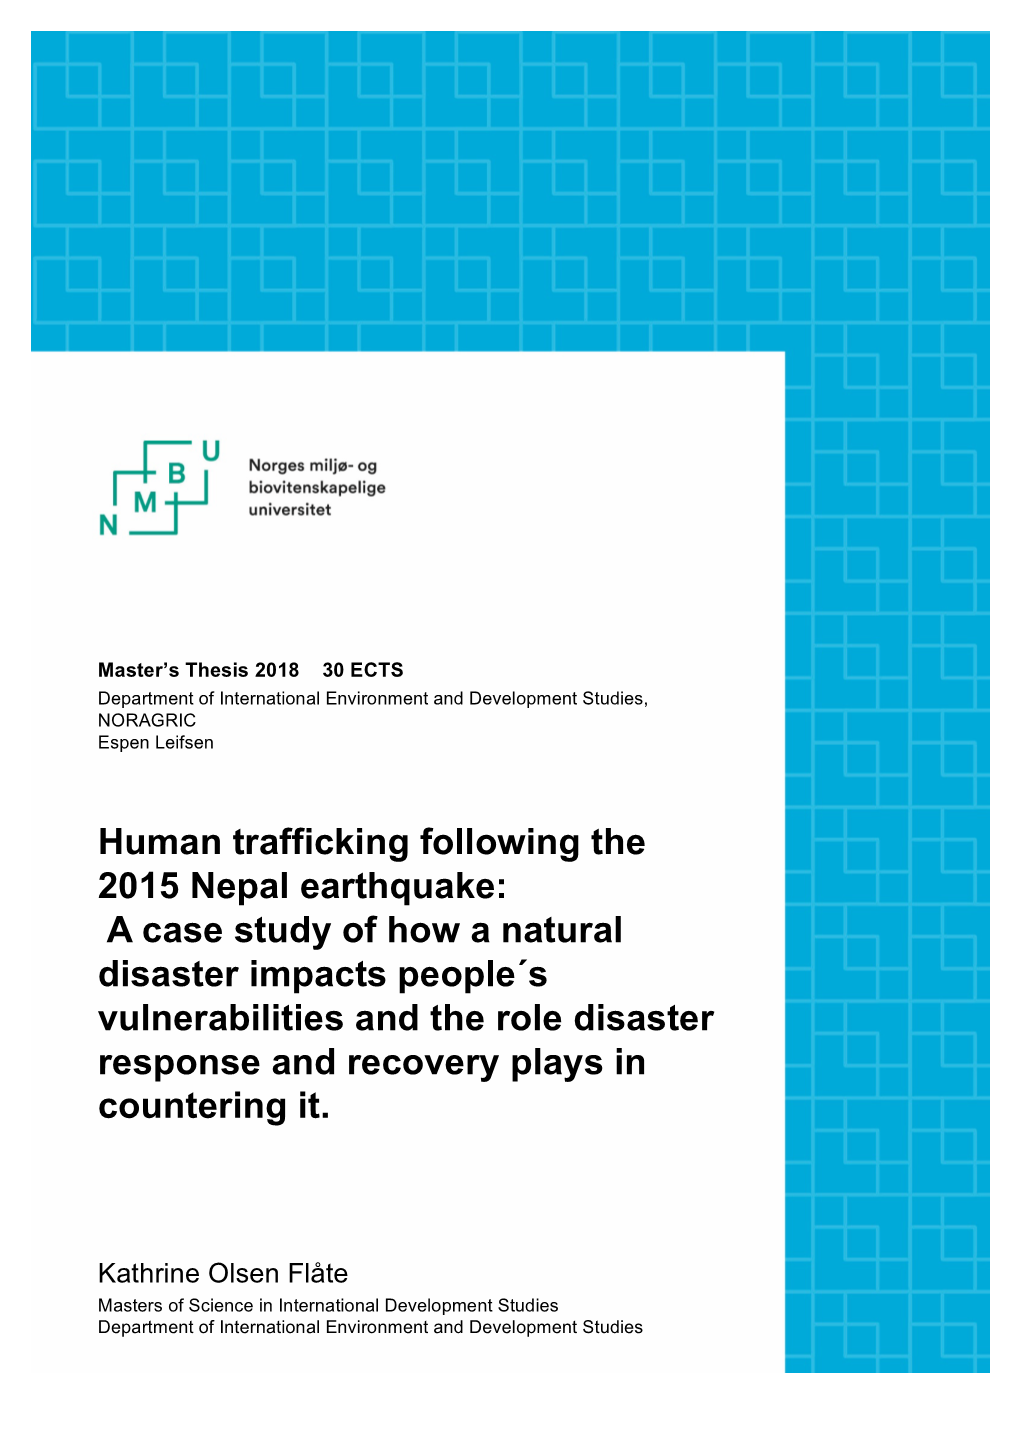 Human Trafficking Following the 2015 Nepal Earthquake